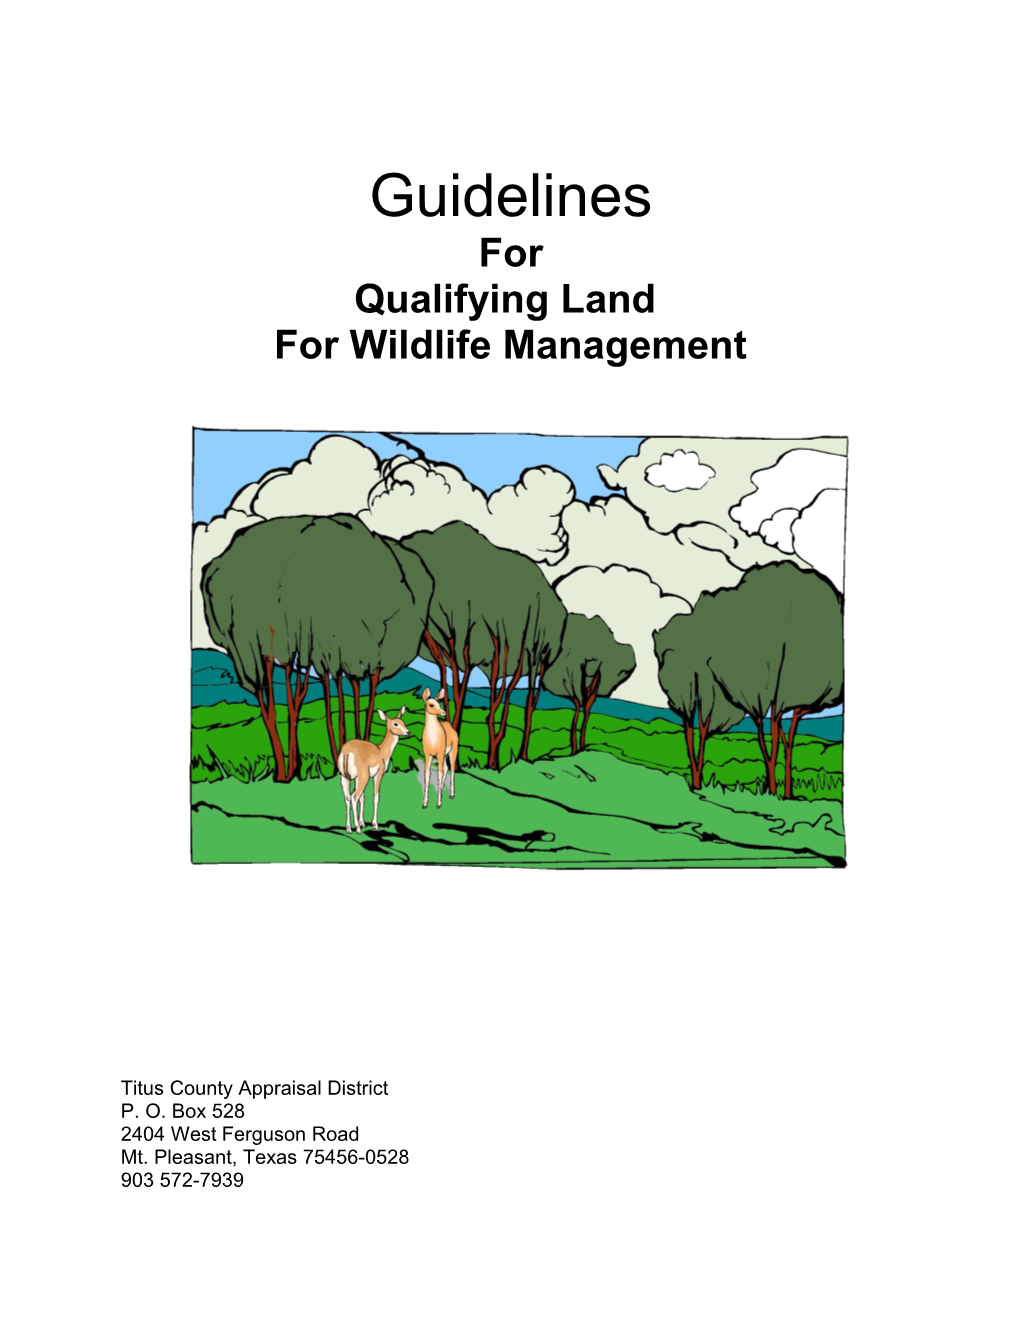 For Wildlife Management